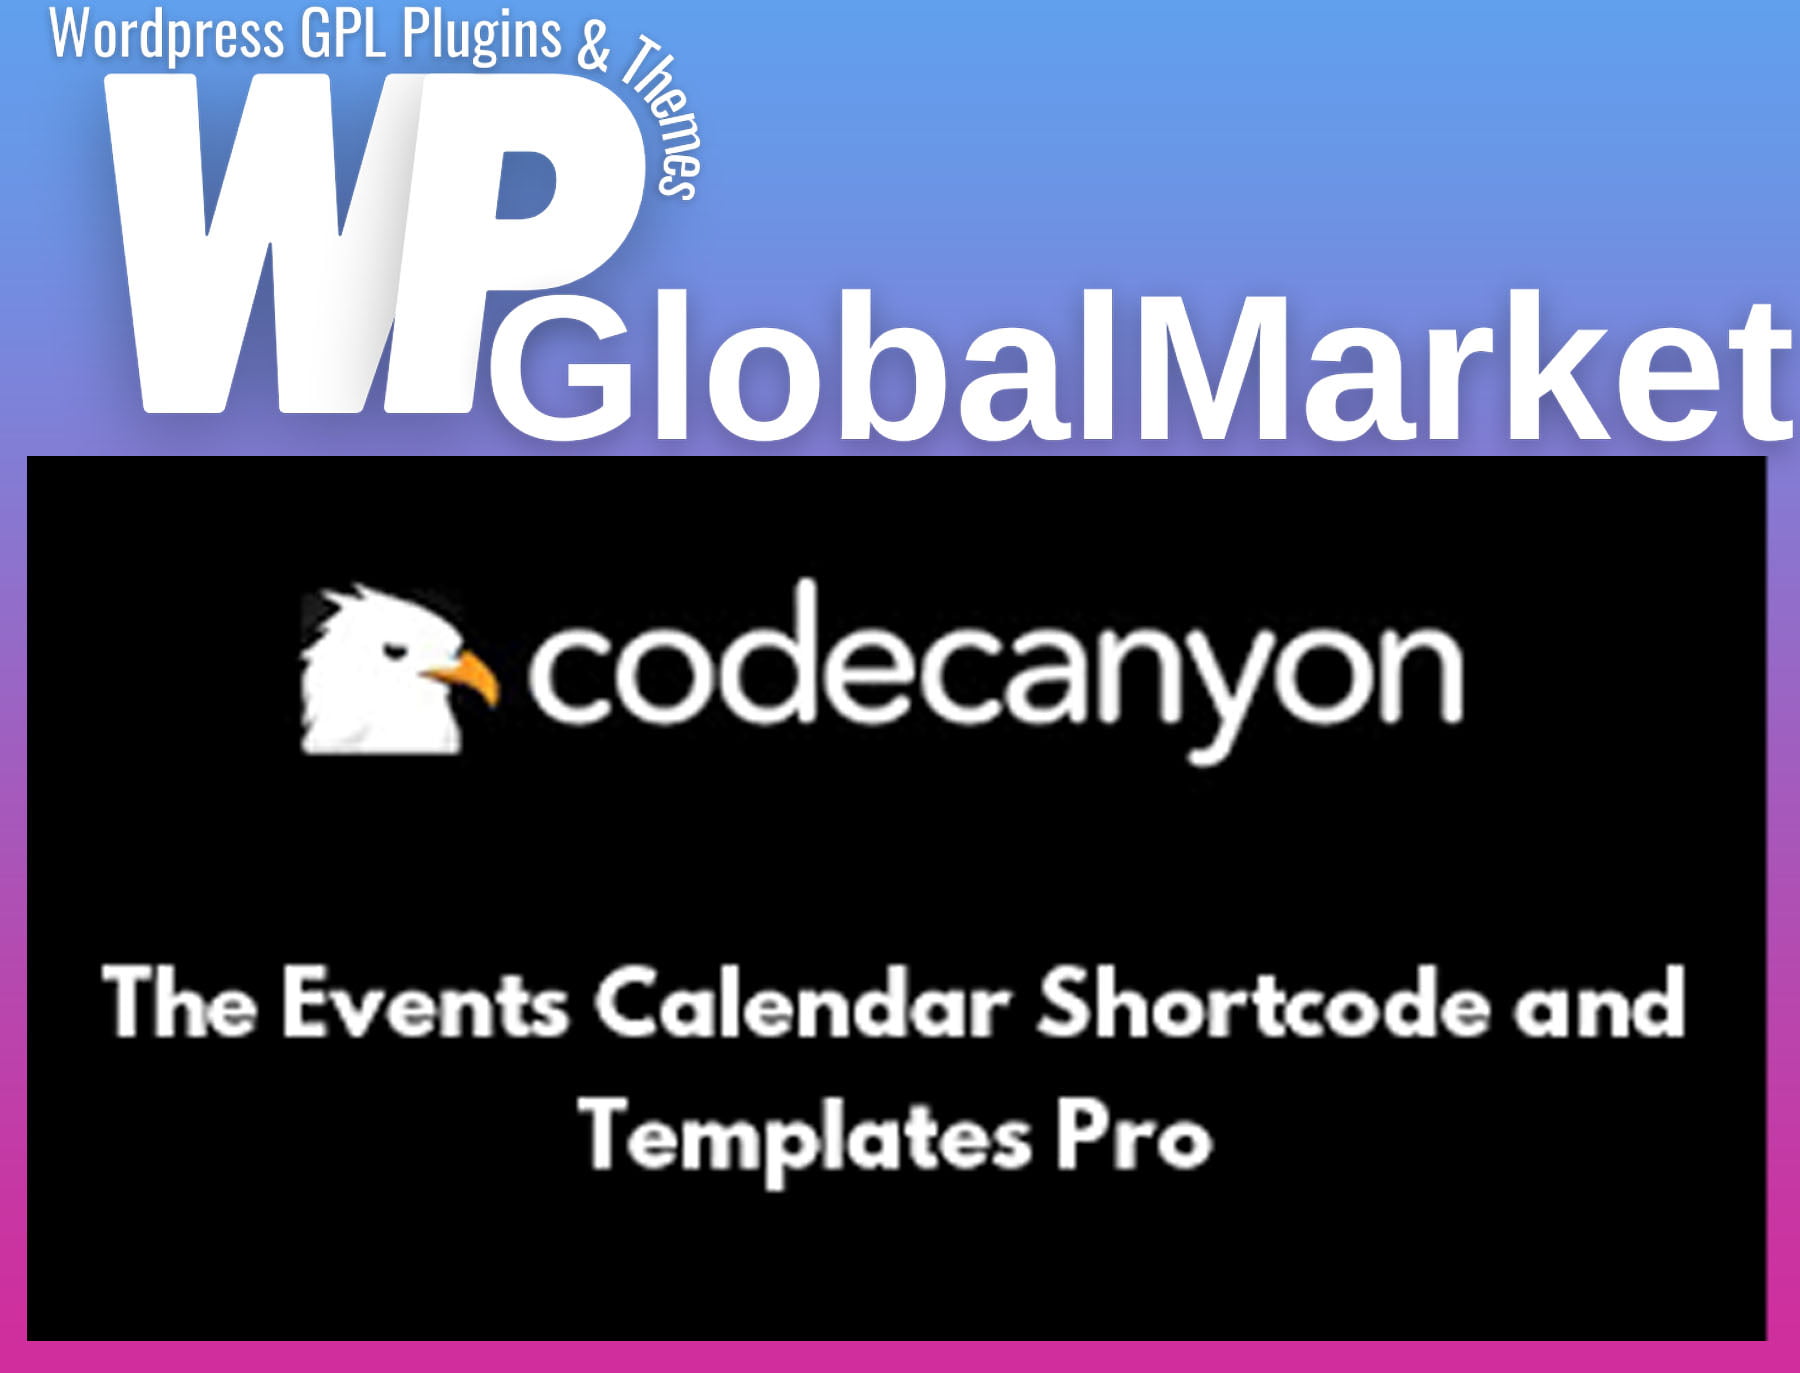 The Events Calendar Shortcode and Templates Pro WordPress Plugin